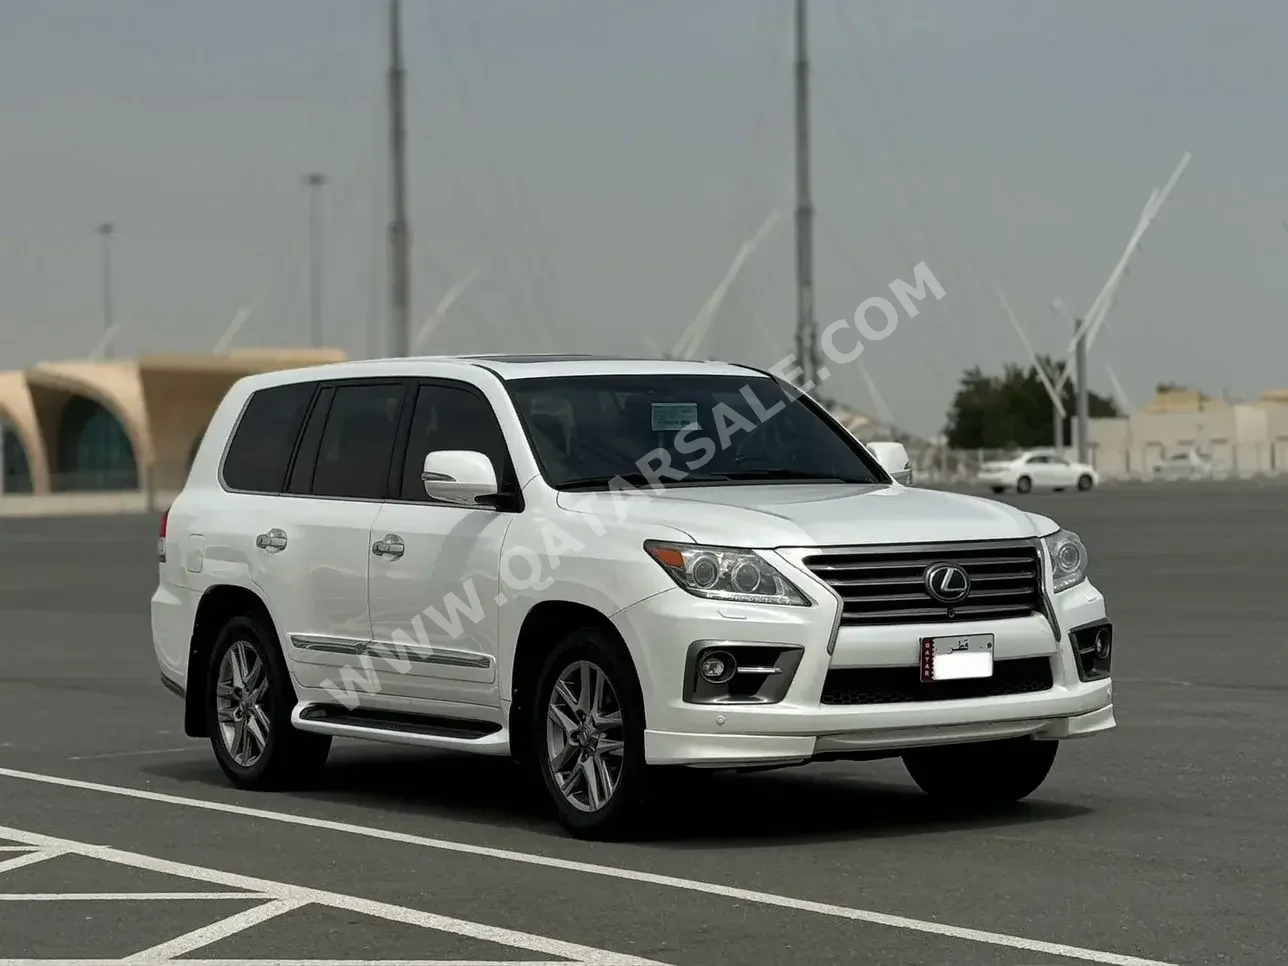 Lexus  LX  570 S  2014  Automatic  200,000 Km  8 Cylinder  Four Wheel Drive (4WD)  SUV  White